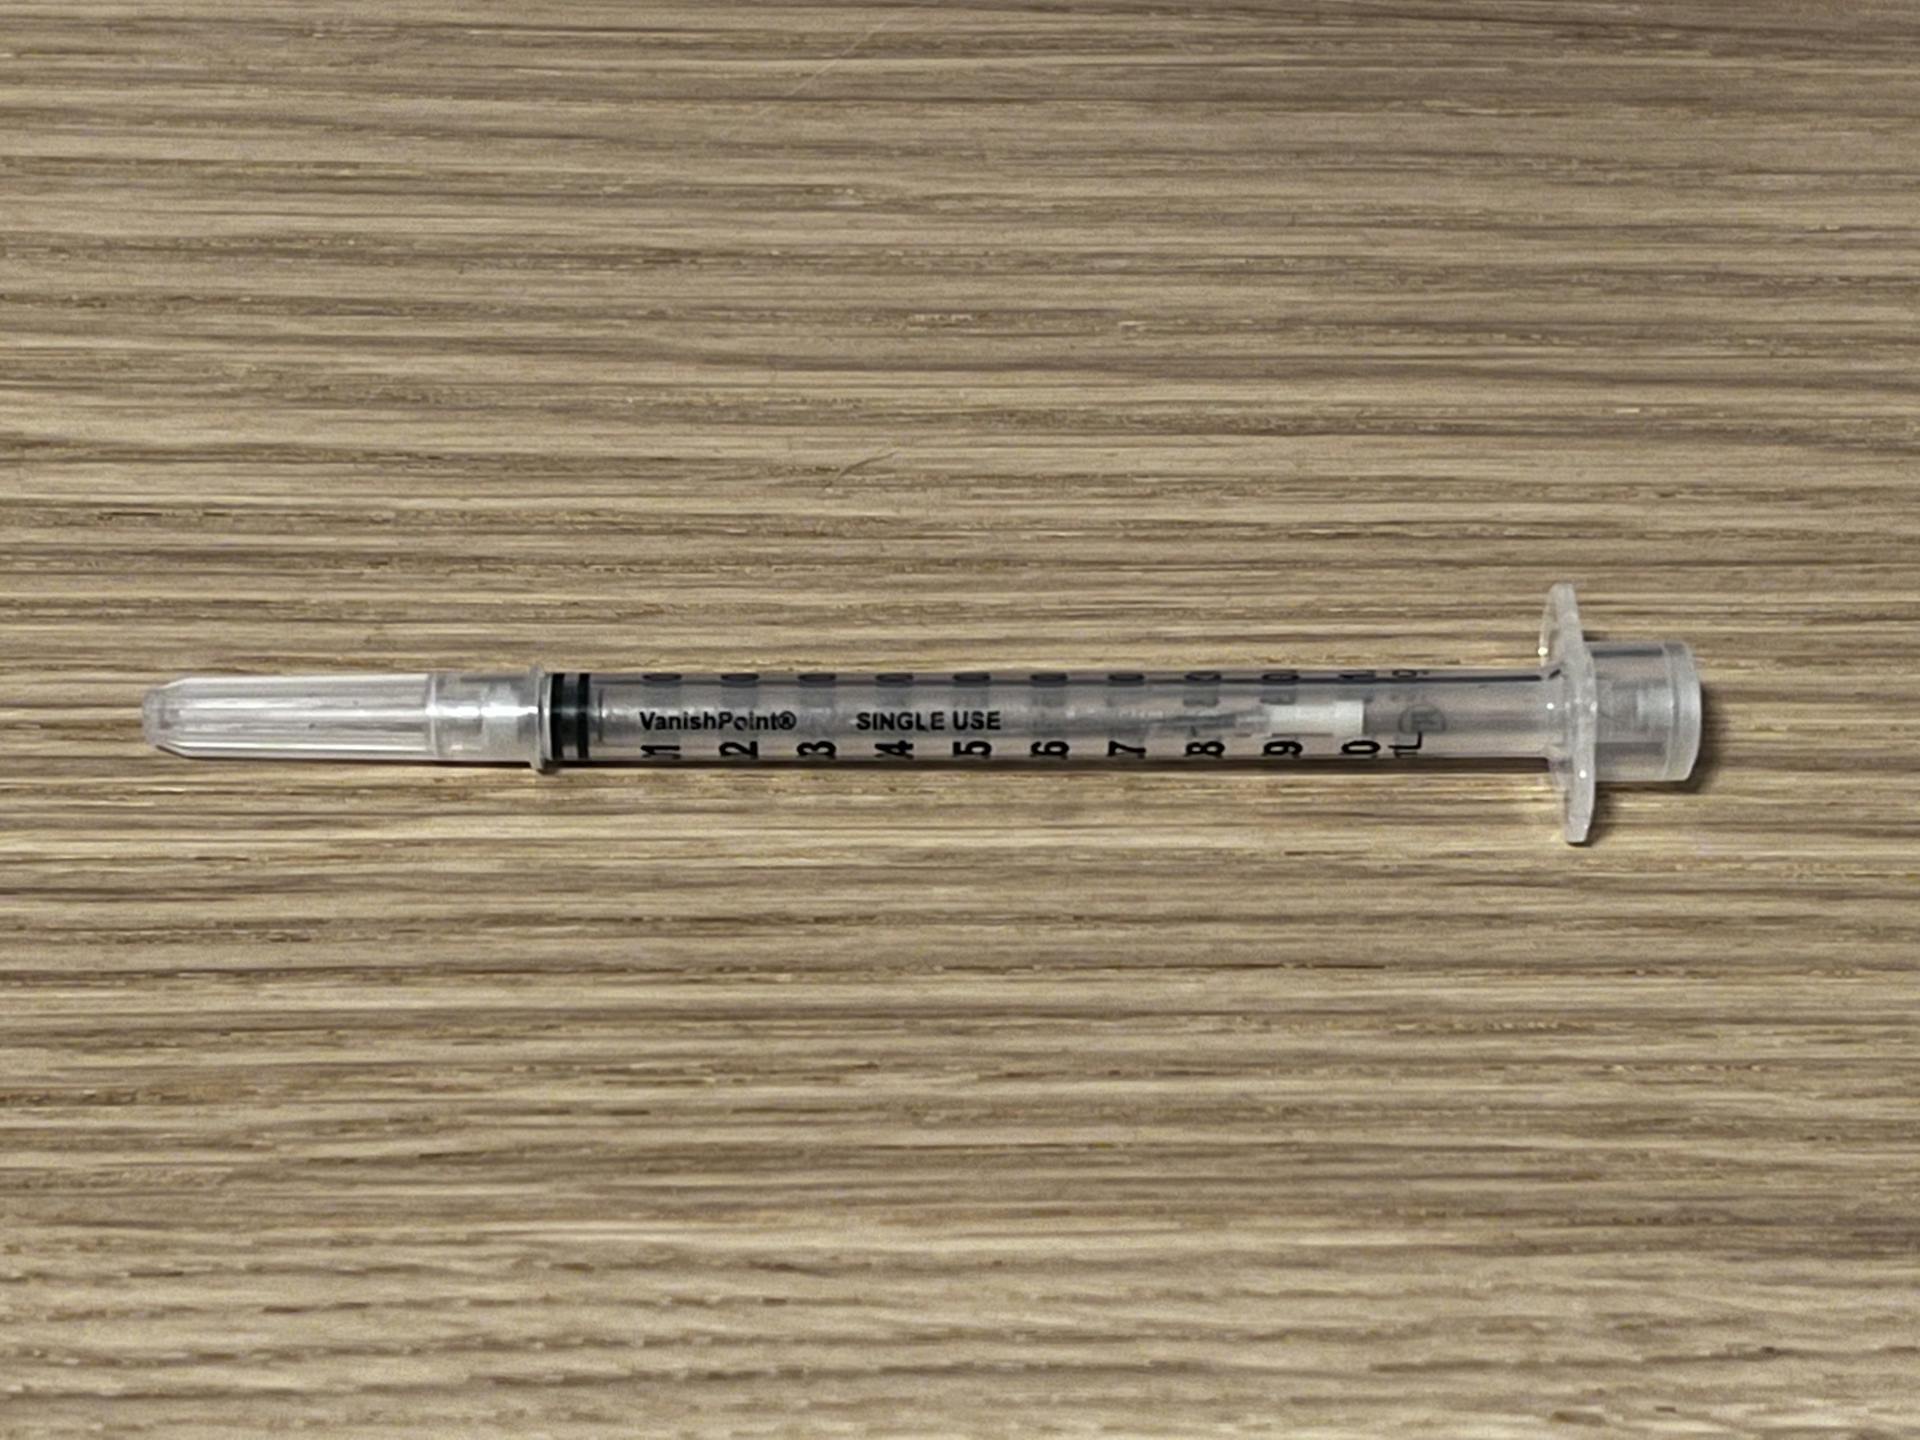 Photograph of VanishPoint LDV Syringe Needle (spent)